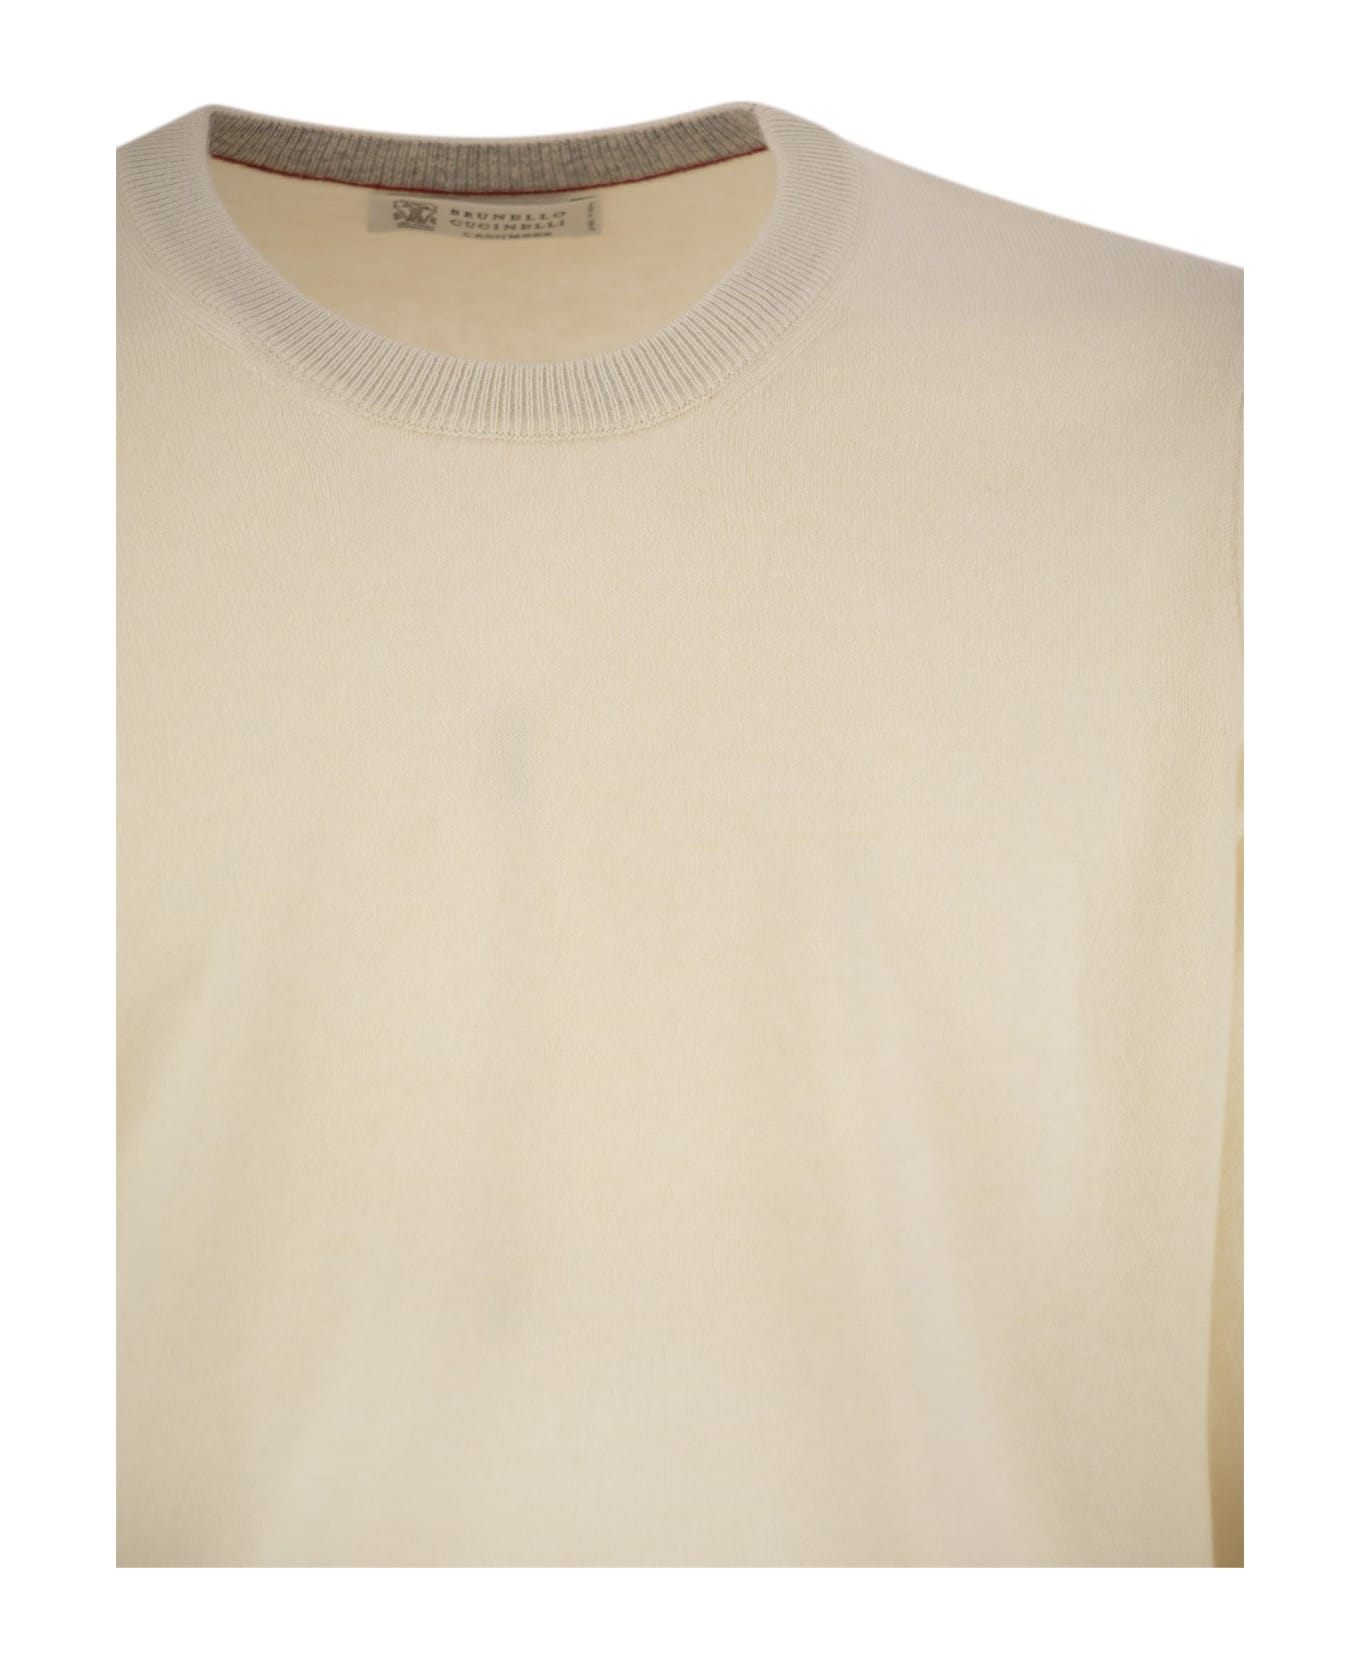 Brunello Cucinelli Cashmere Crew-neck Sweater - Ivory ニットウェア